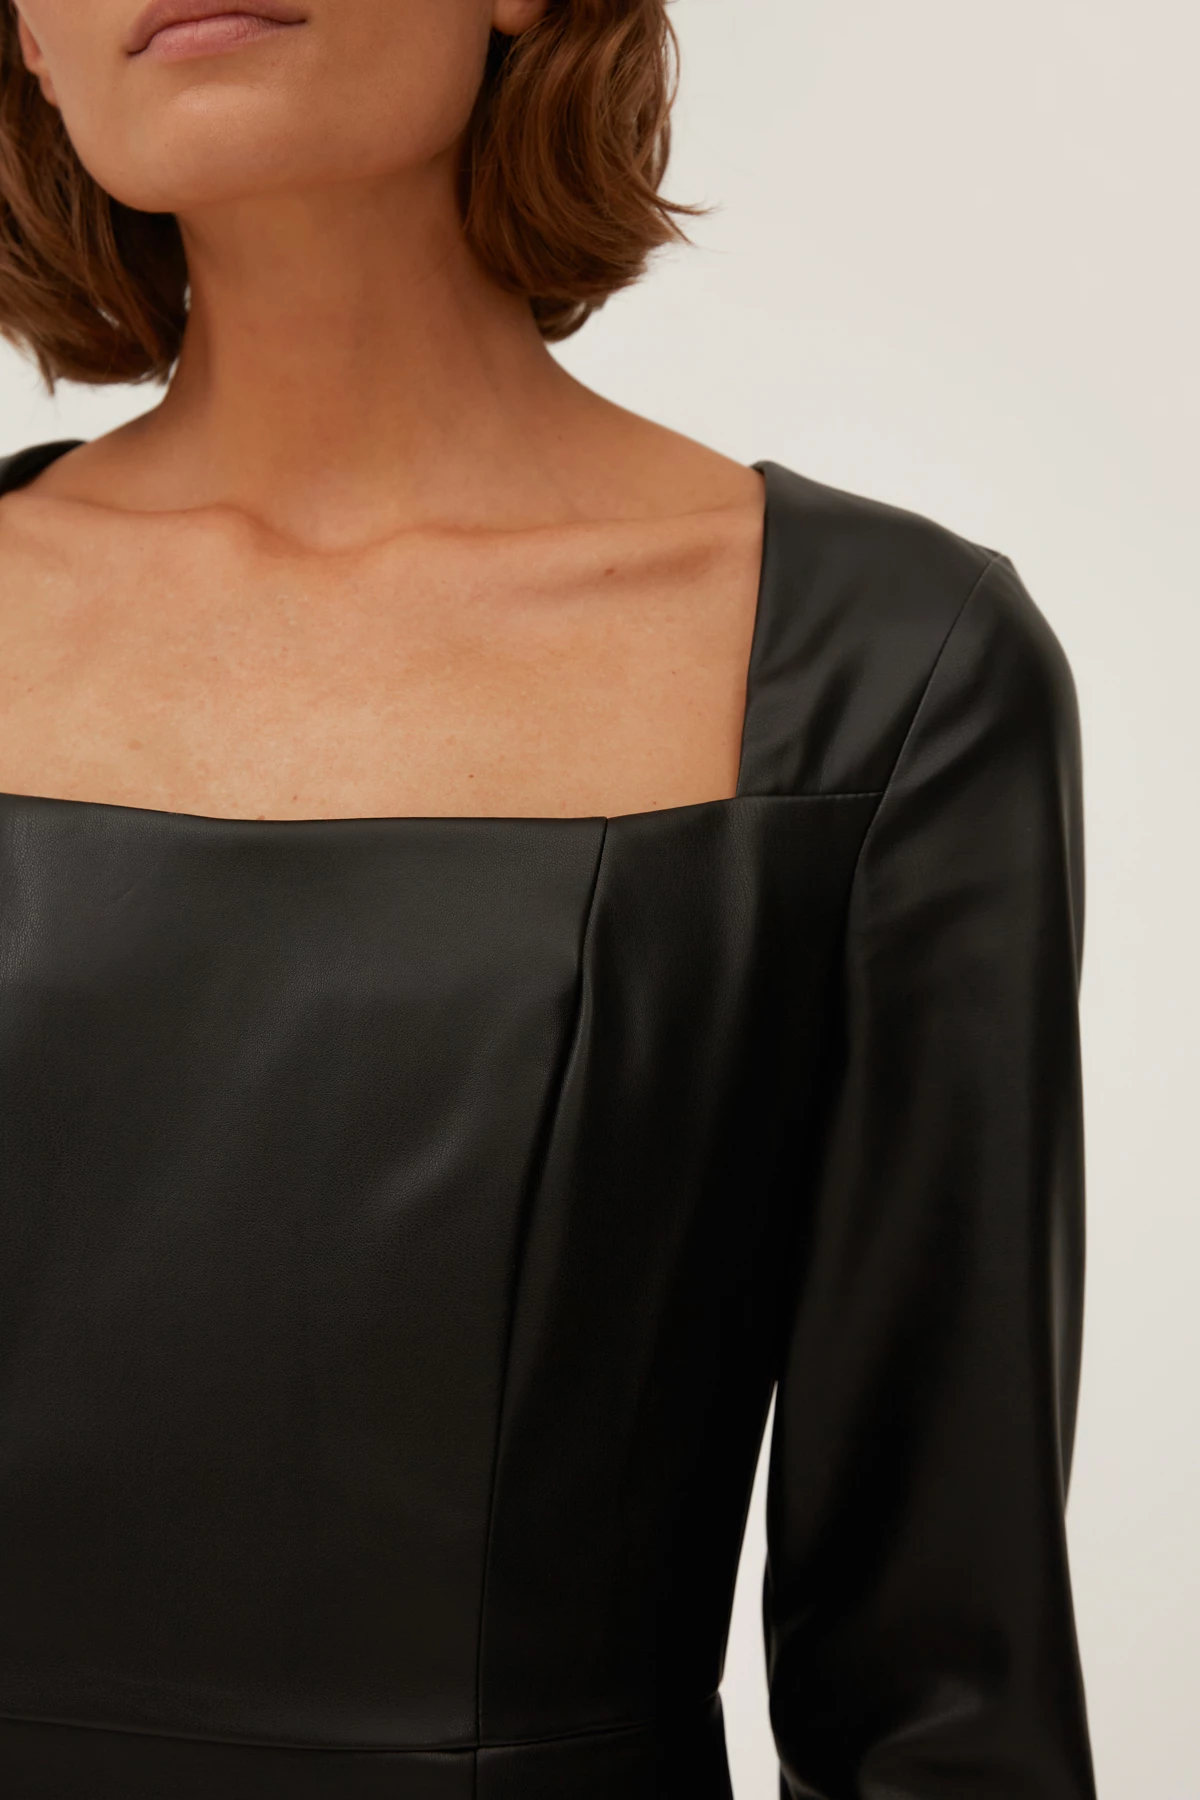 Black short dress made of eco-leather, photo 2